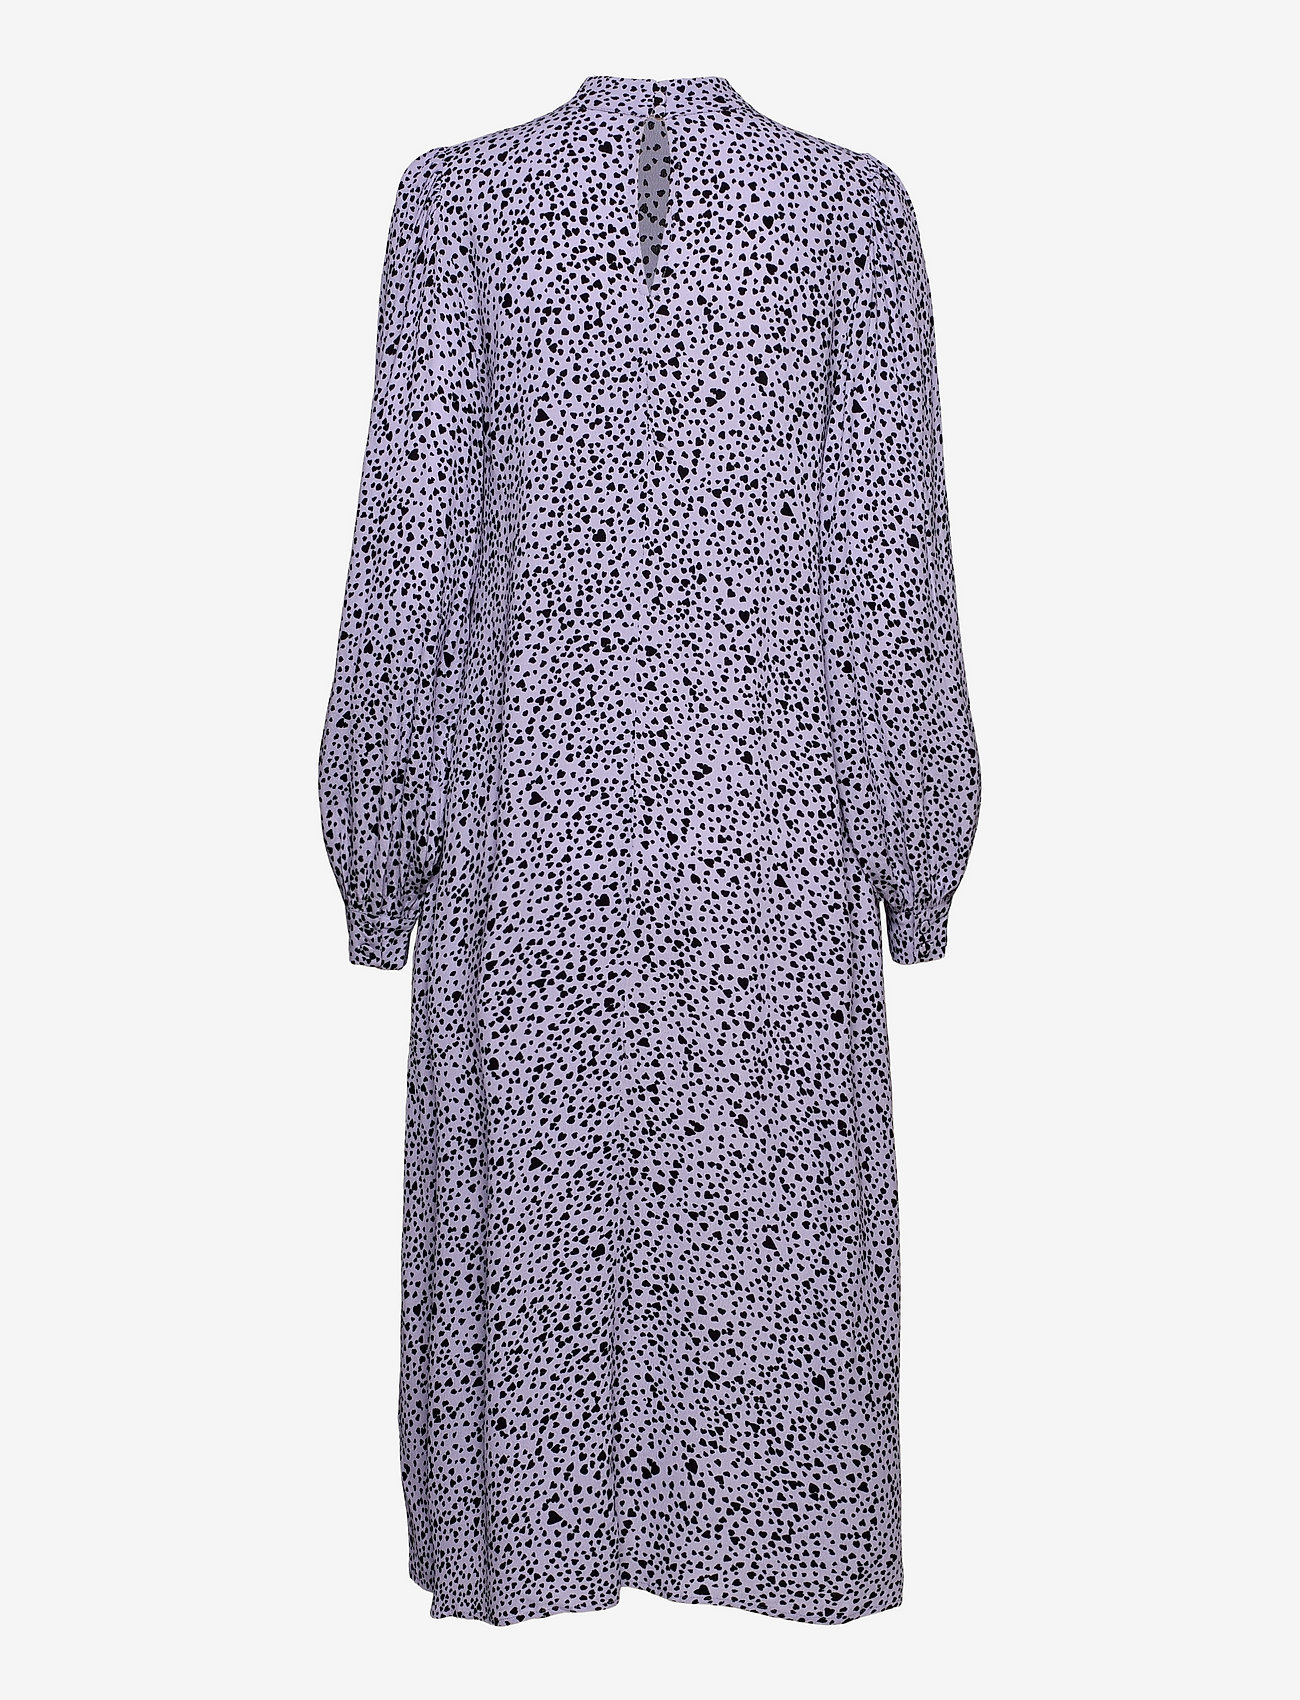 mbyM - Hestia - sukienki do kolan i midi - decima lavender print - 1